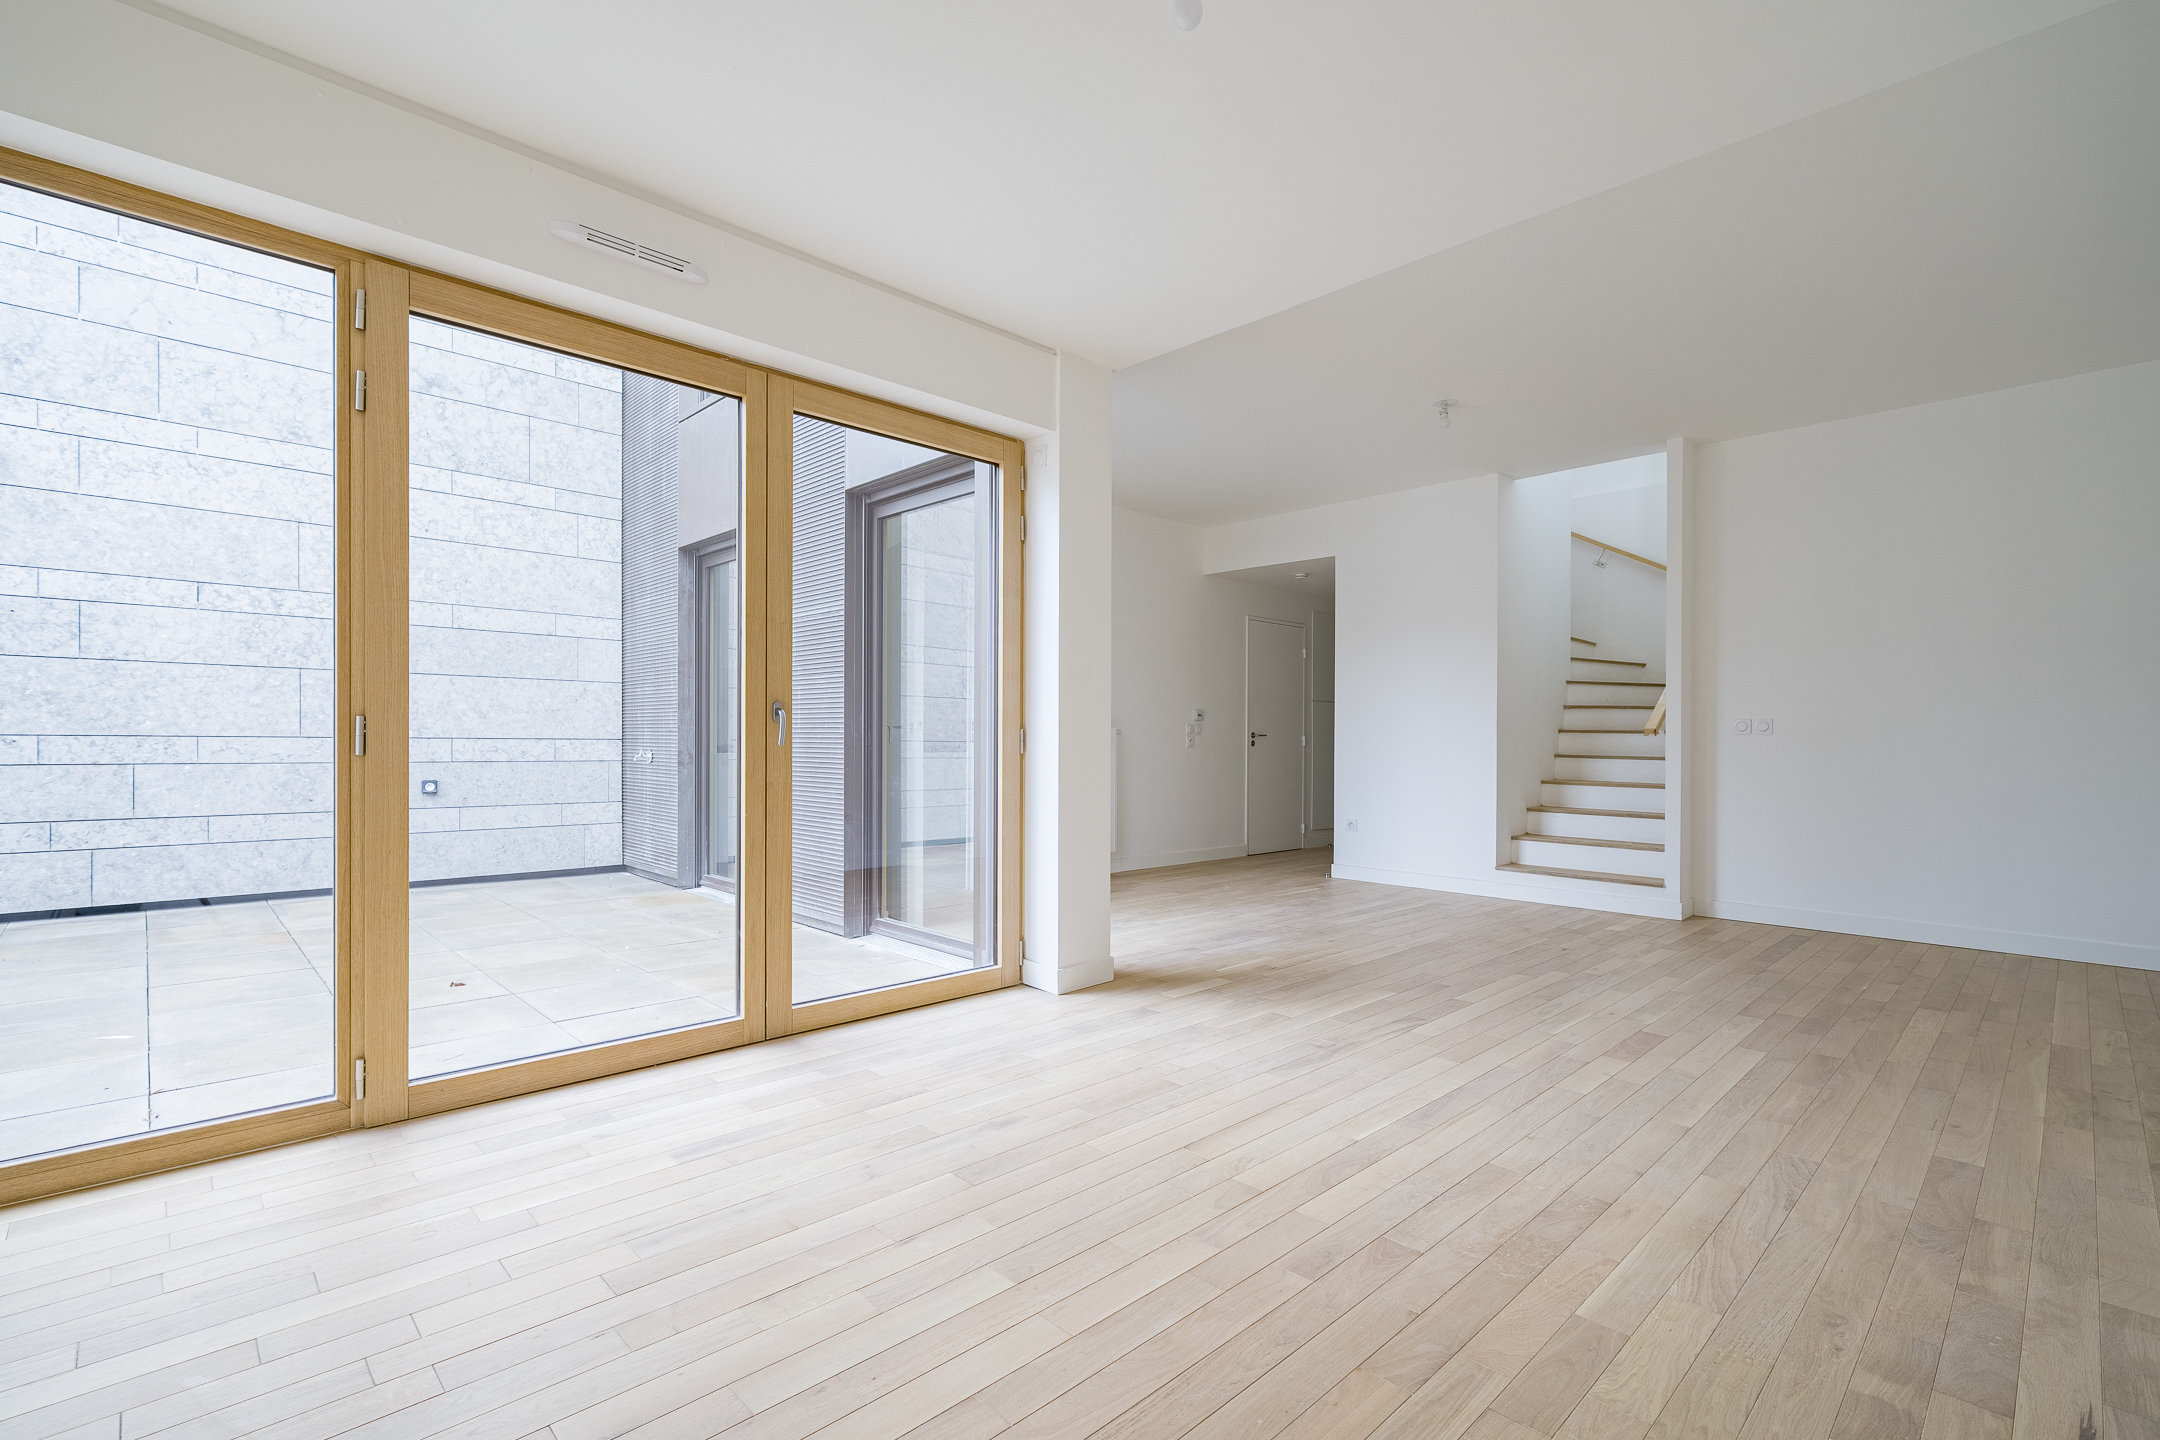 Appartement a louer ville-d'avray - 5 pièce(s) - 99.49 m2 - Surfyn